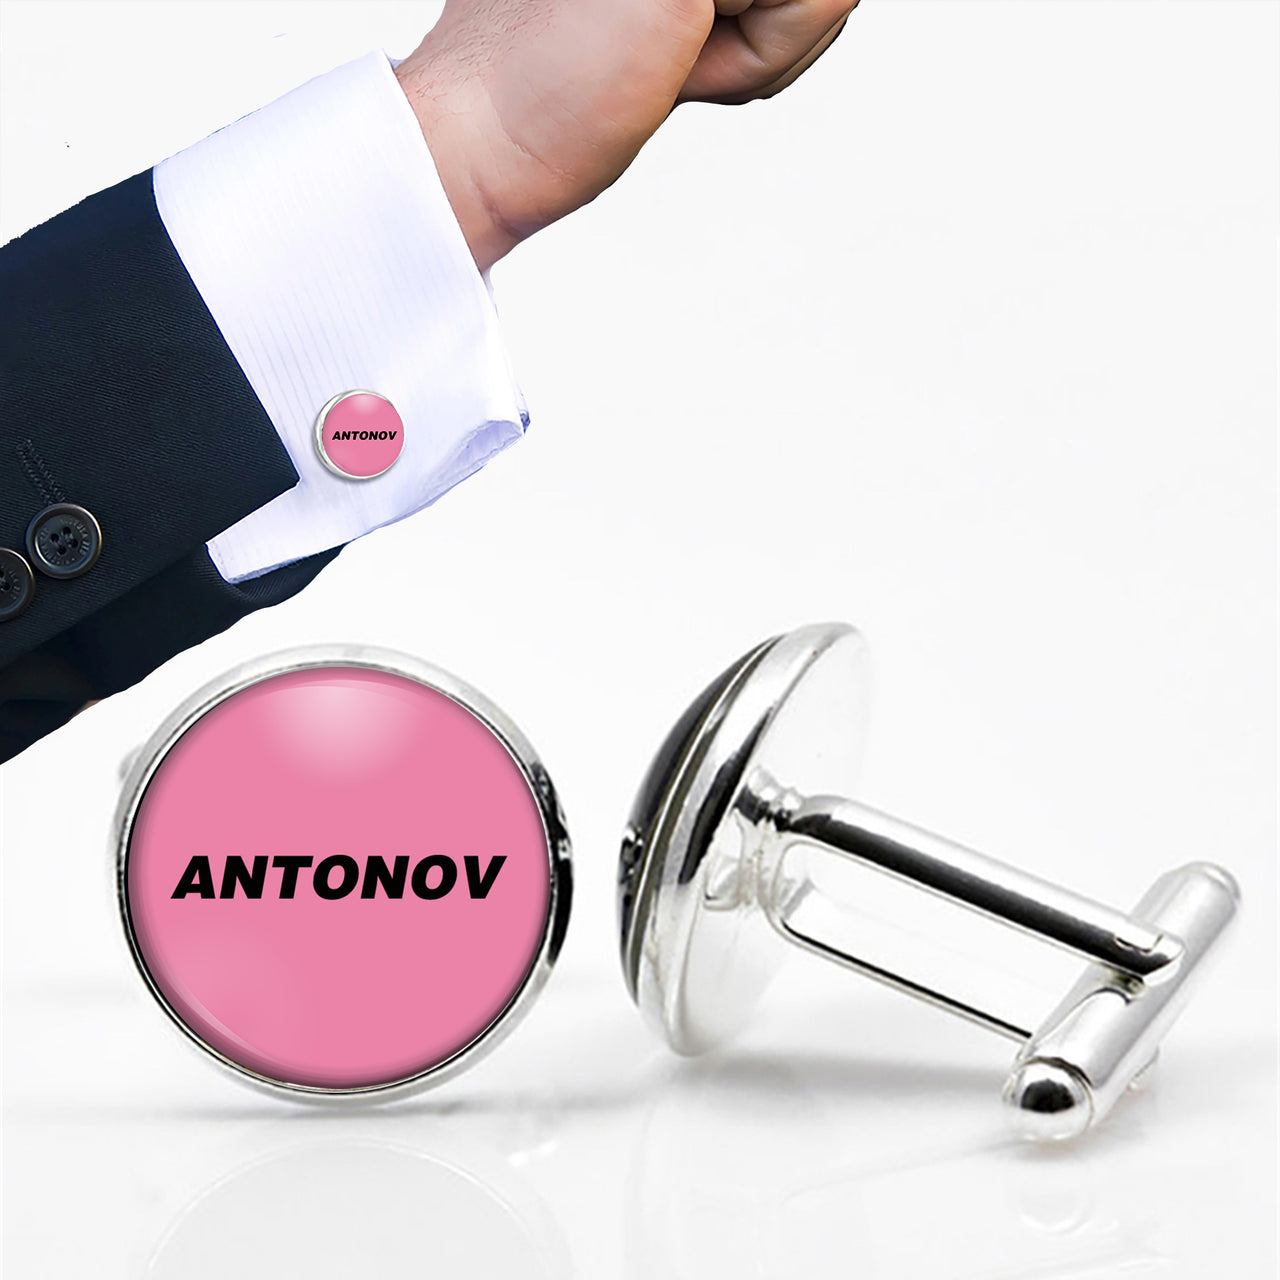 Antonov & Text Designed Cuff Links